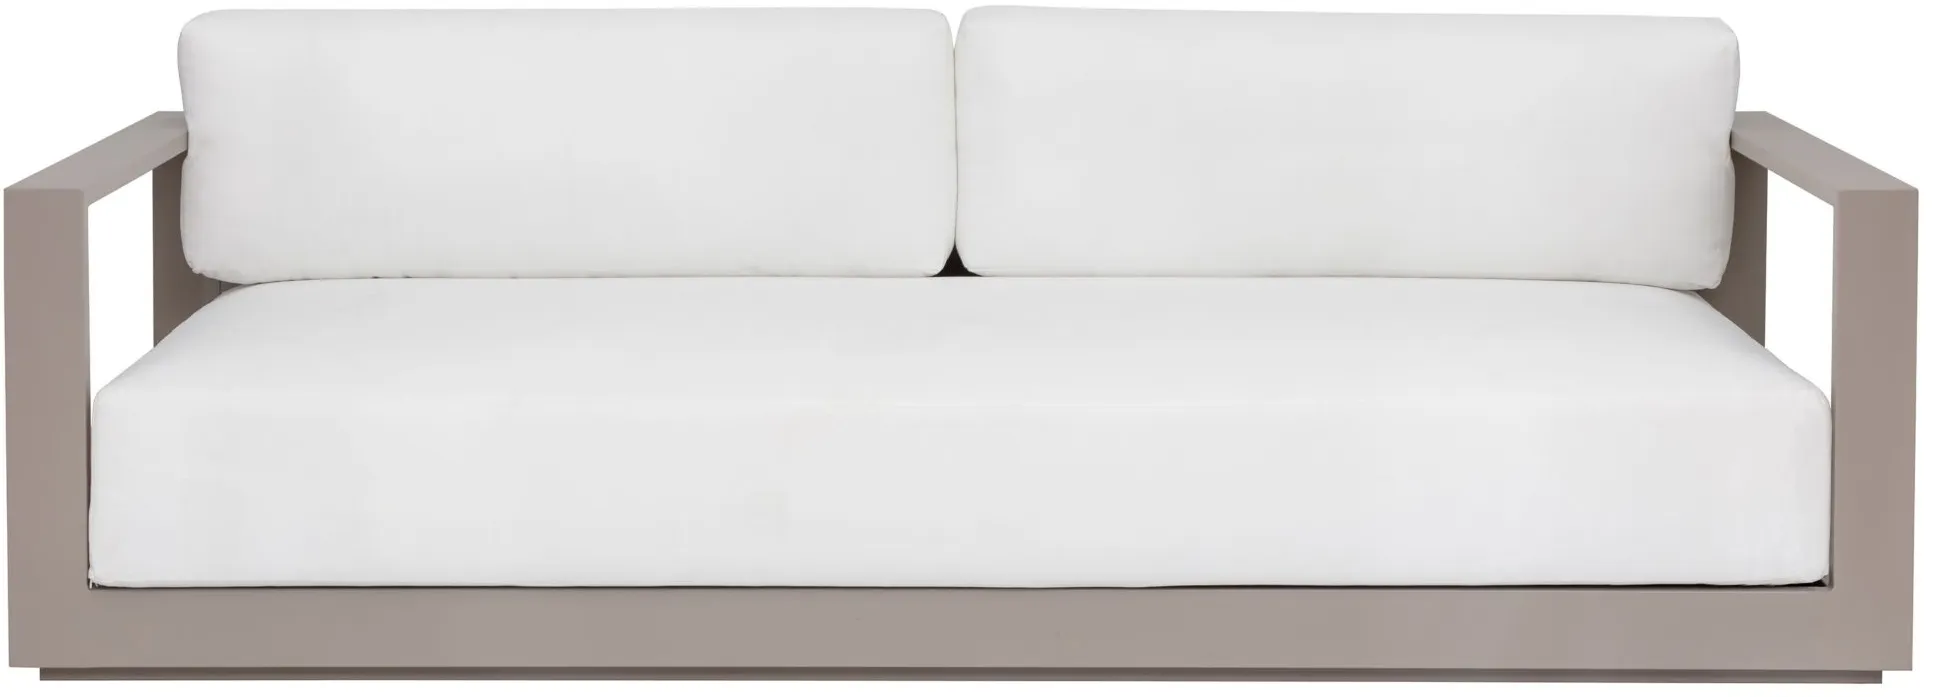 Tavira Sofa in Stinson White by Sunpan